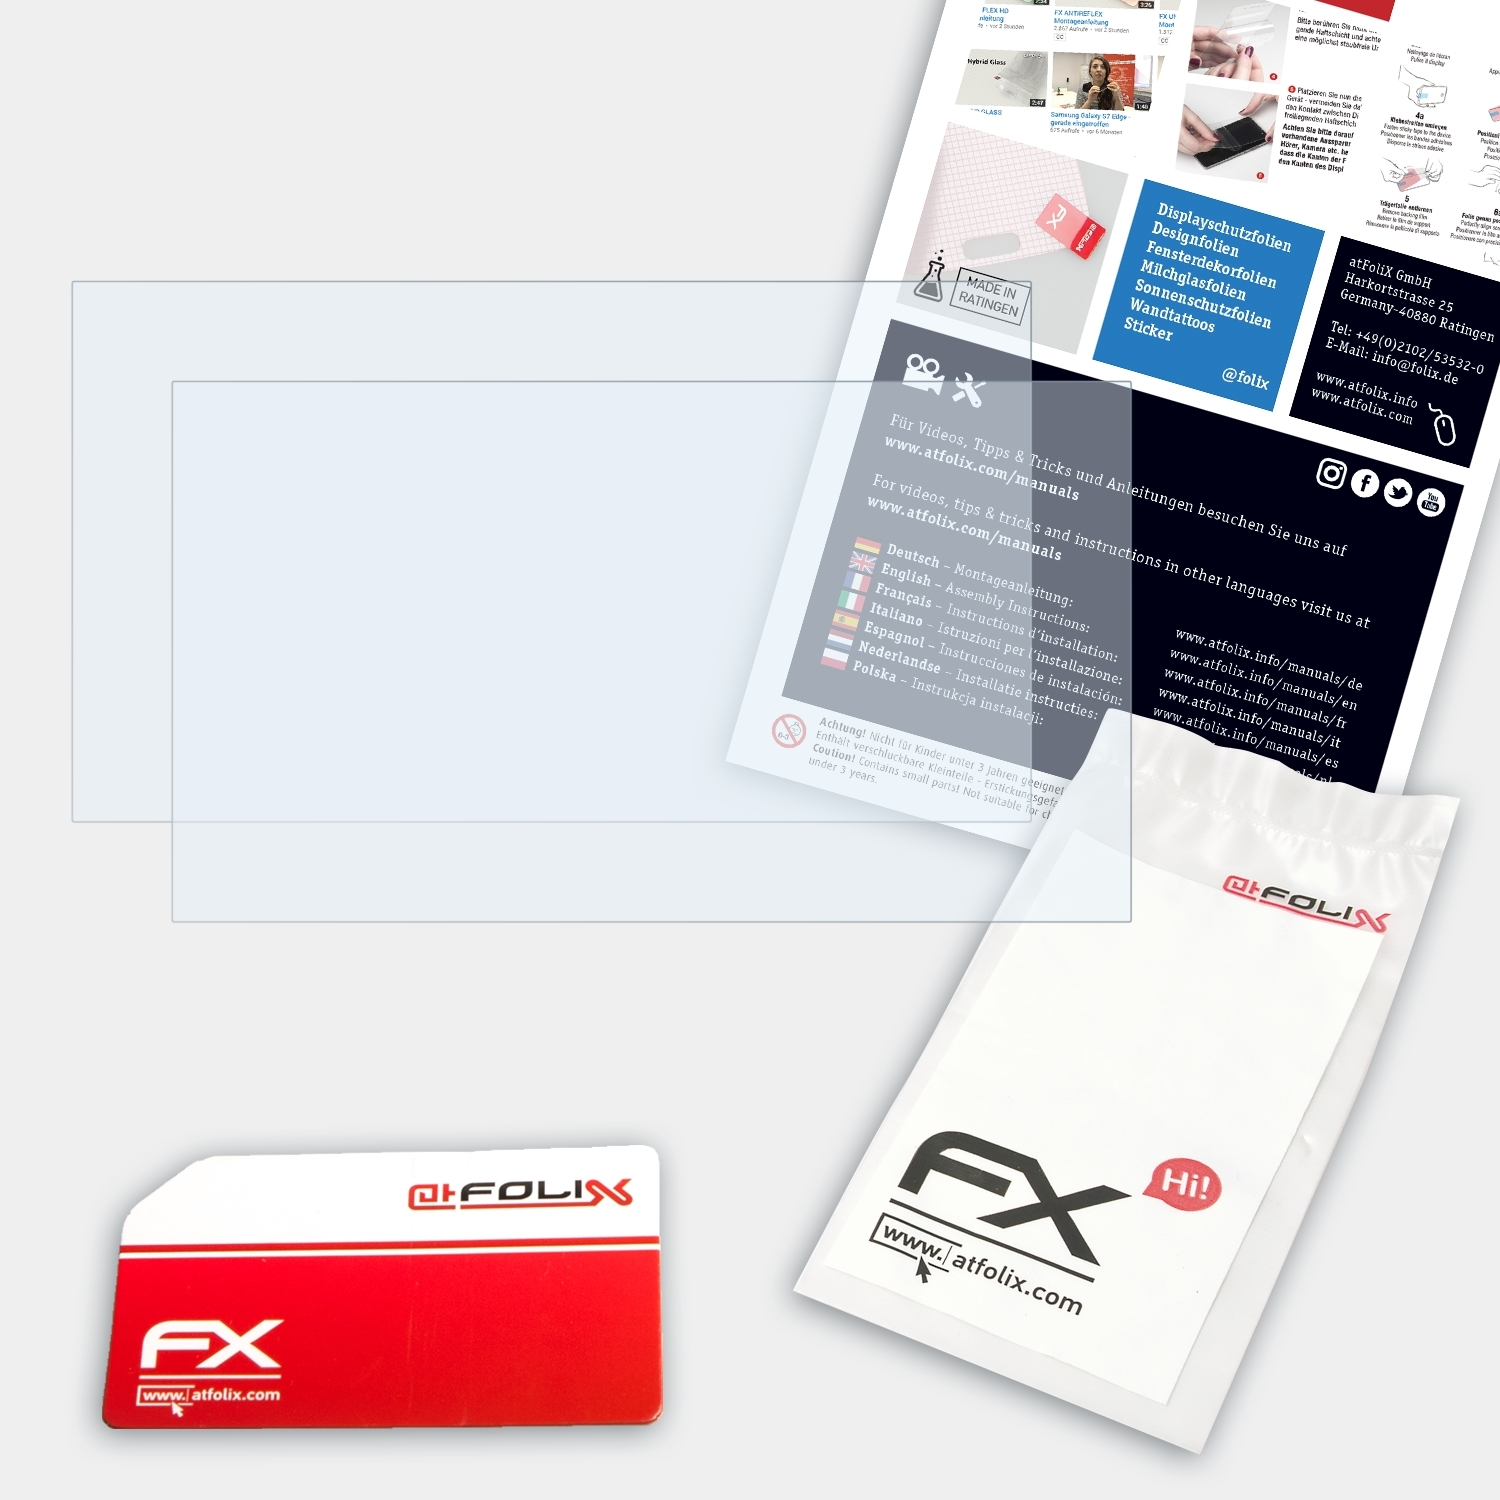 ATFOLIX 2x FX-Clear Displayschutz(für ThinkPad T450) Lenovo